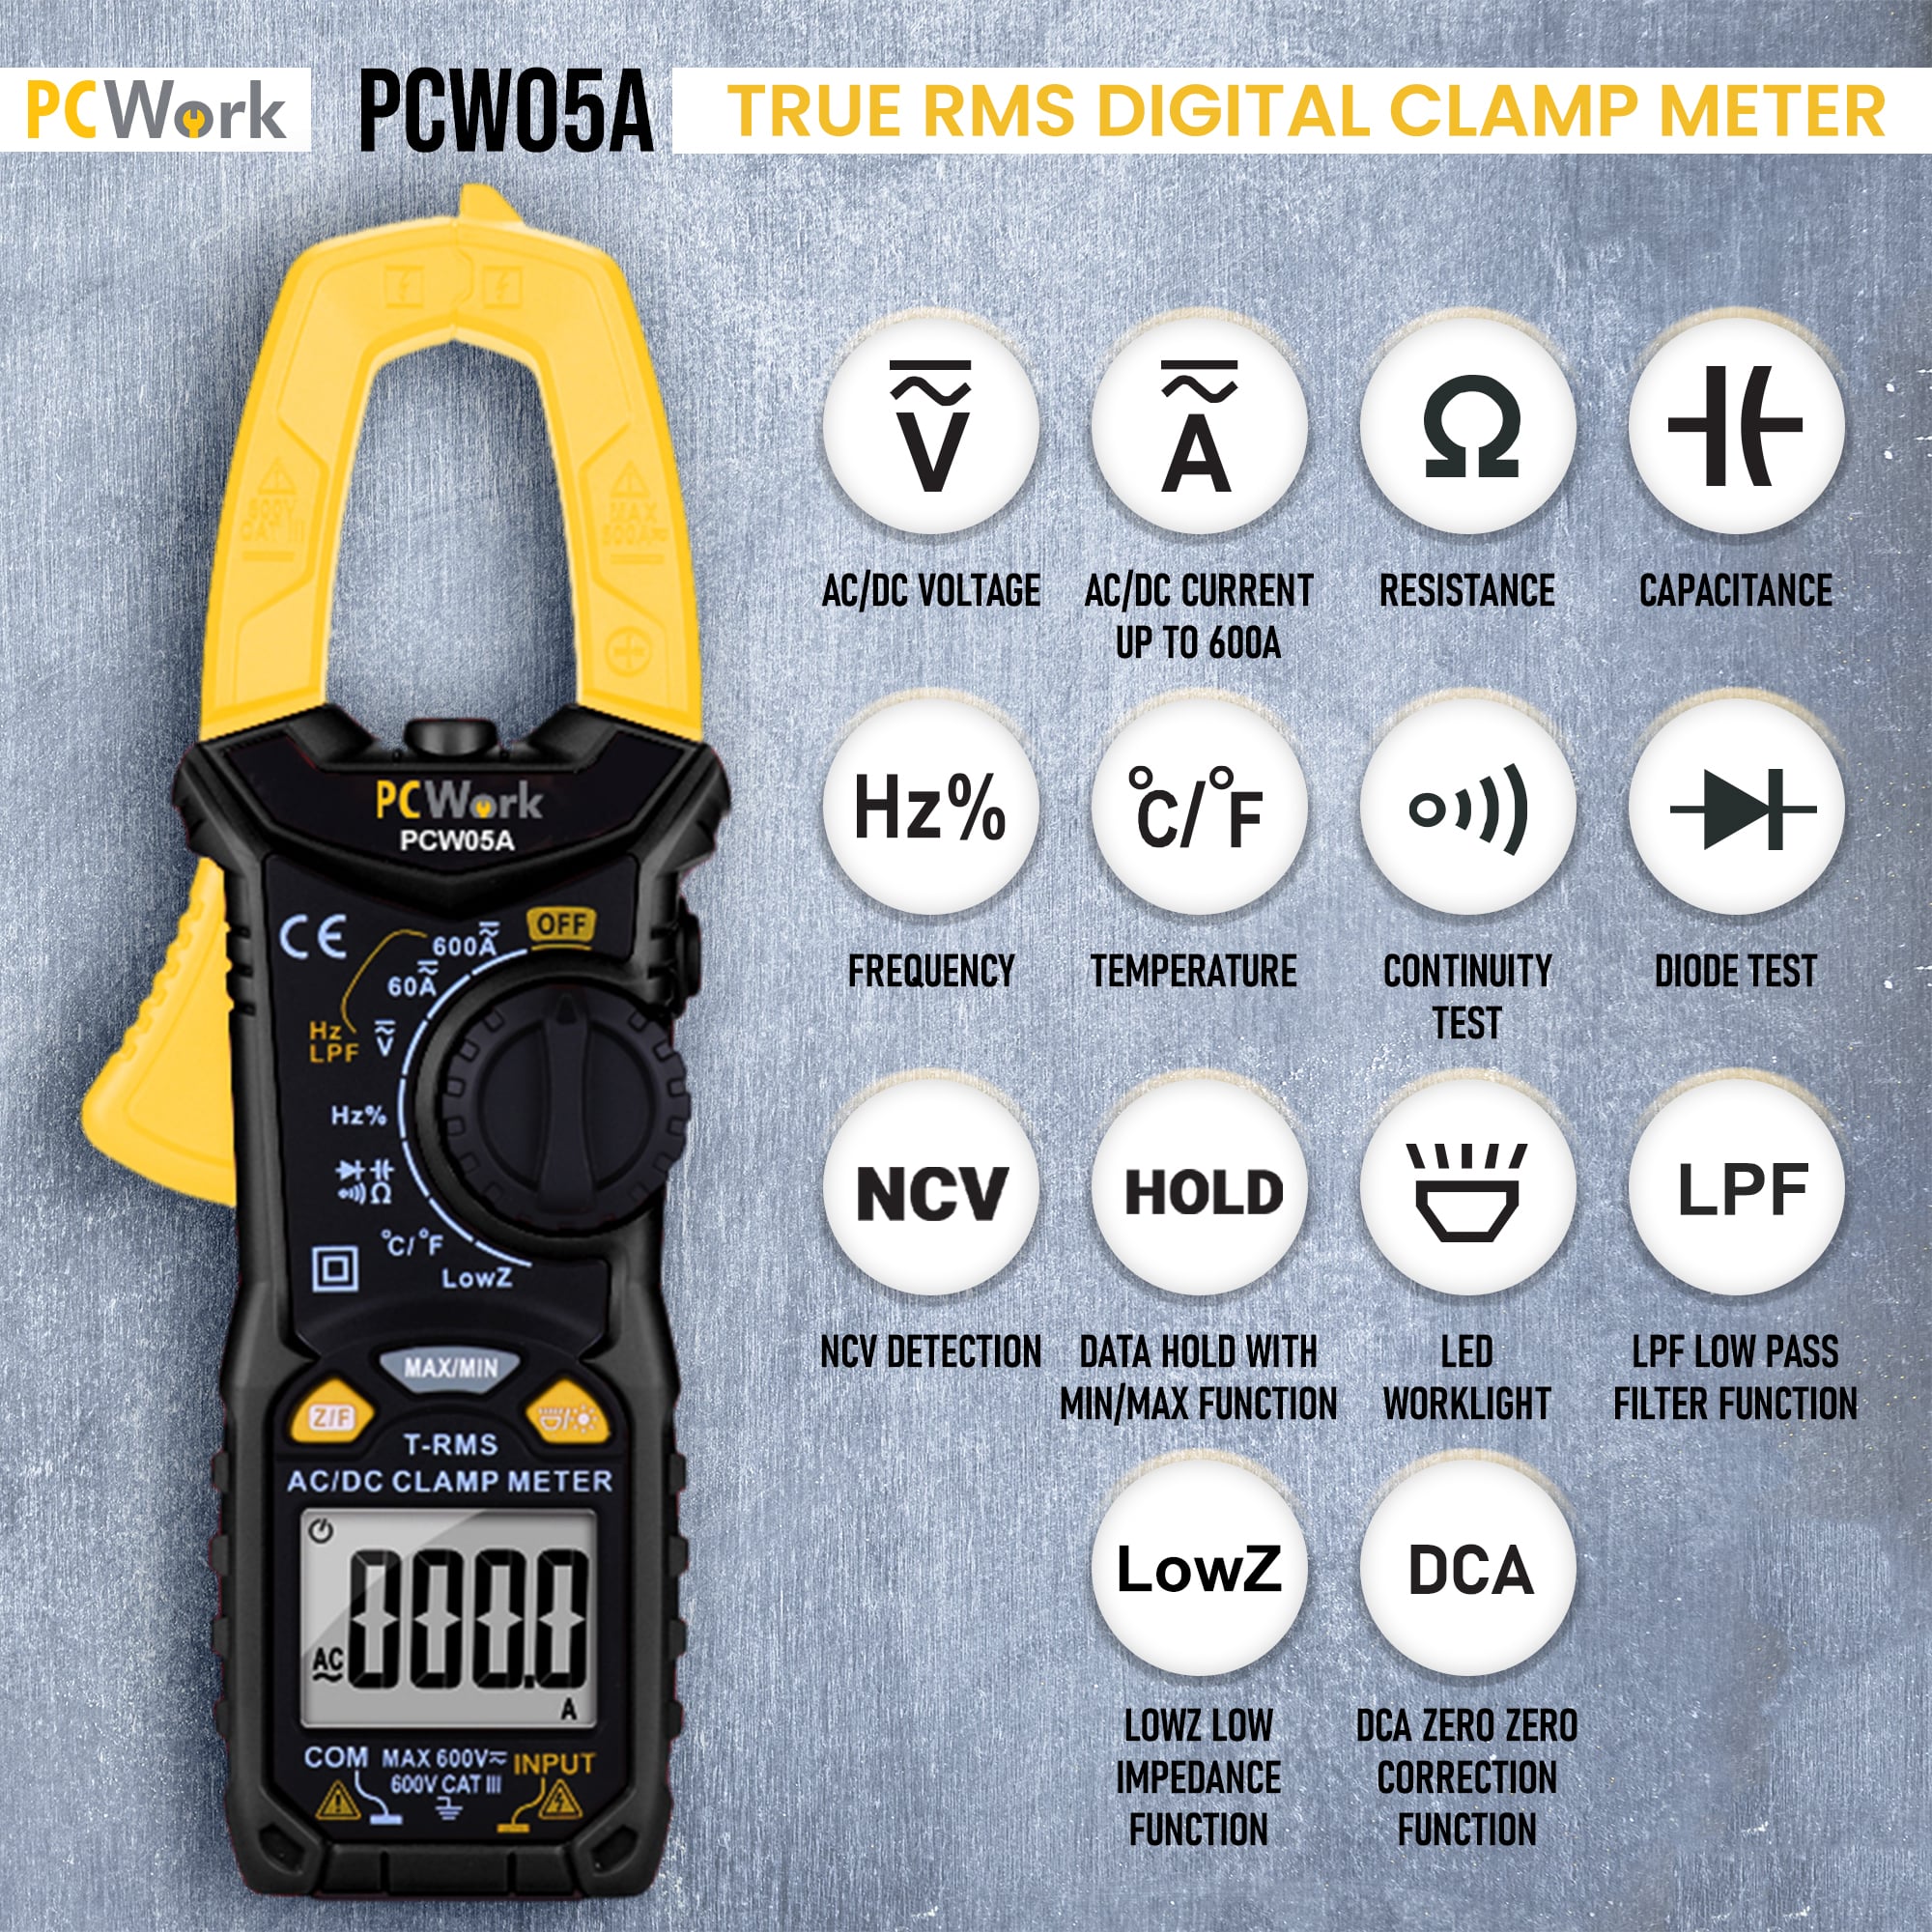 PCW05A Stromzange, digital, 600A, True RMS, 6000 counts